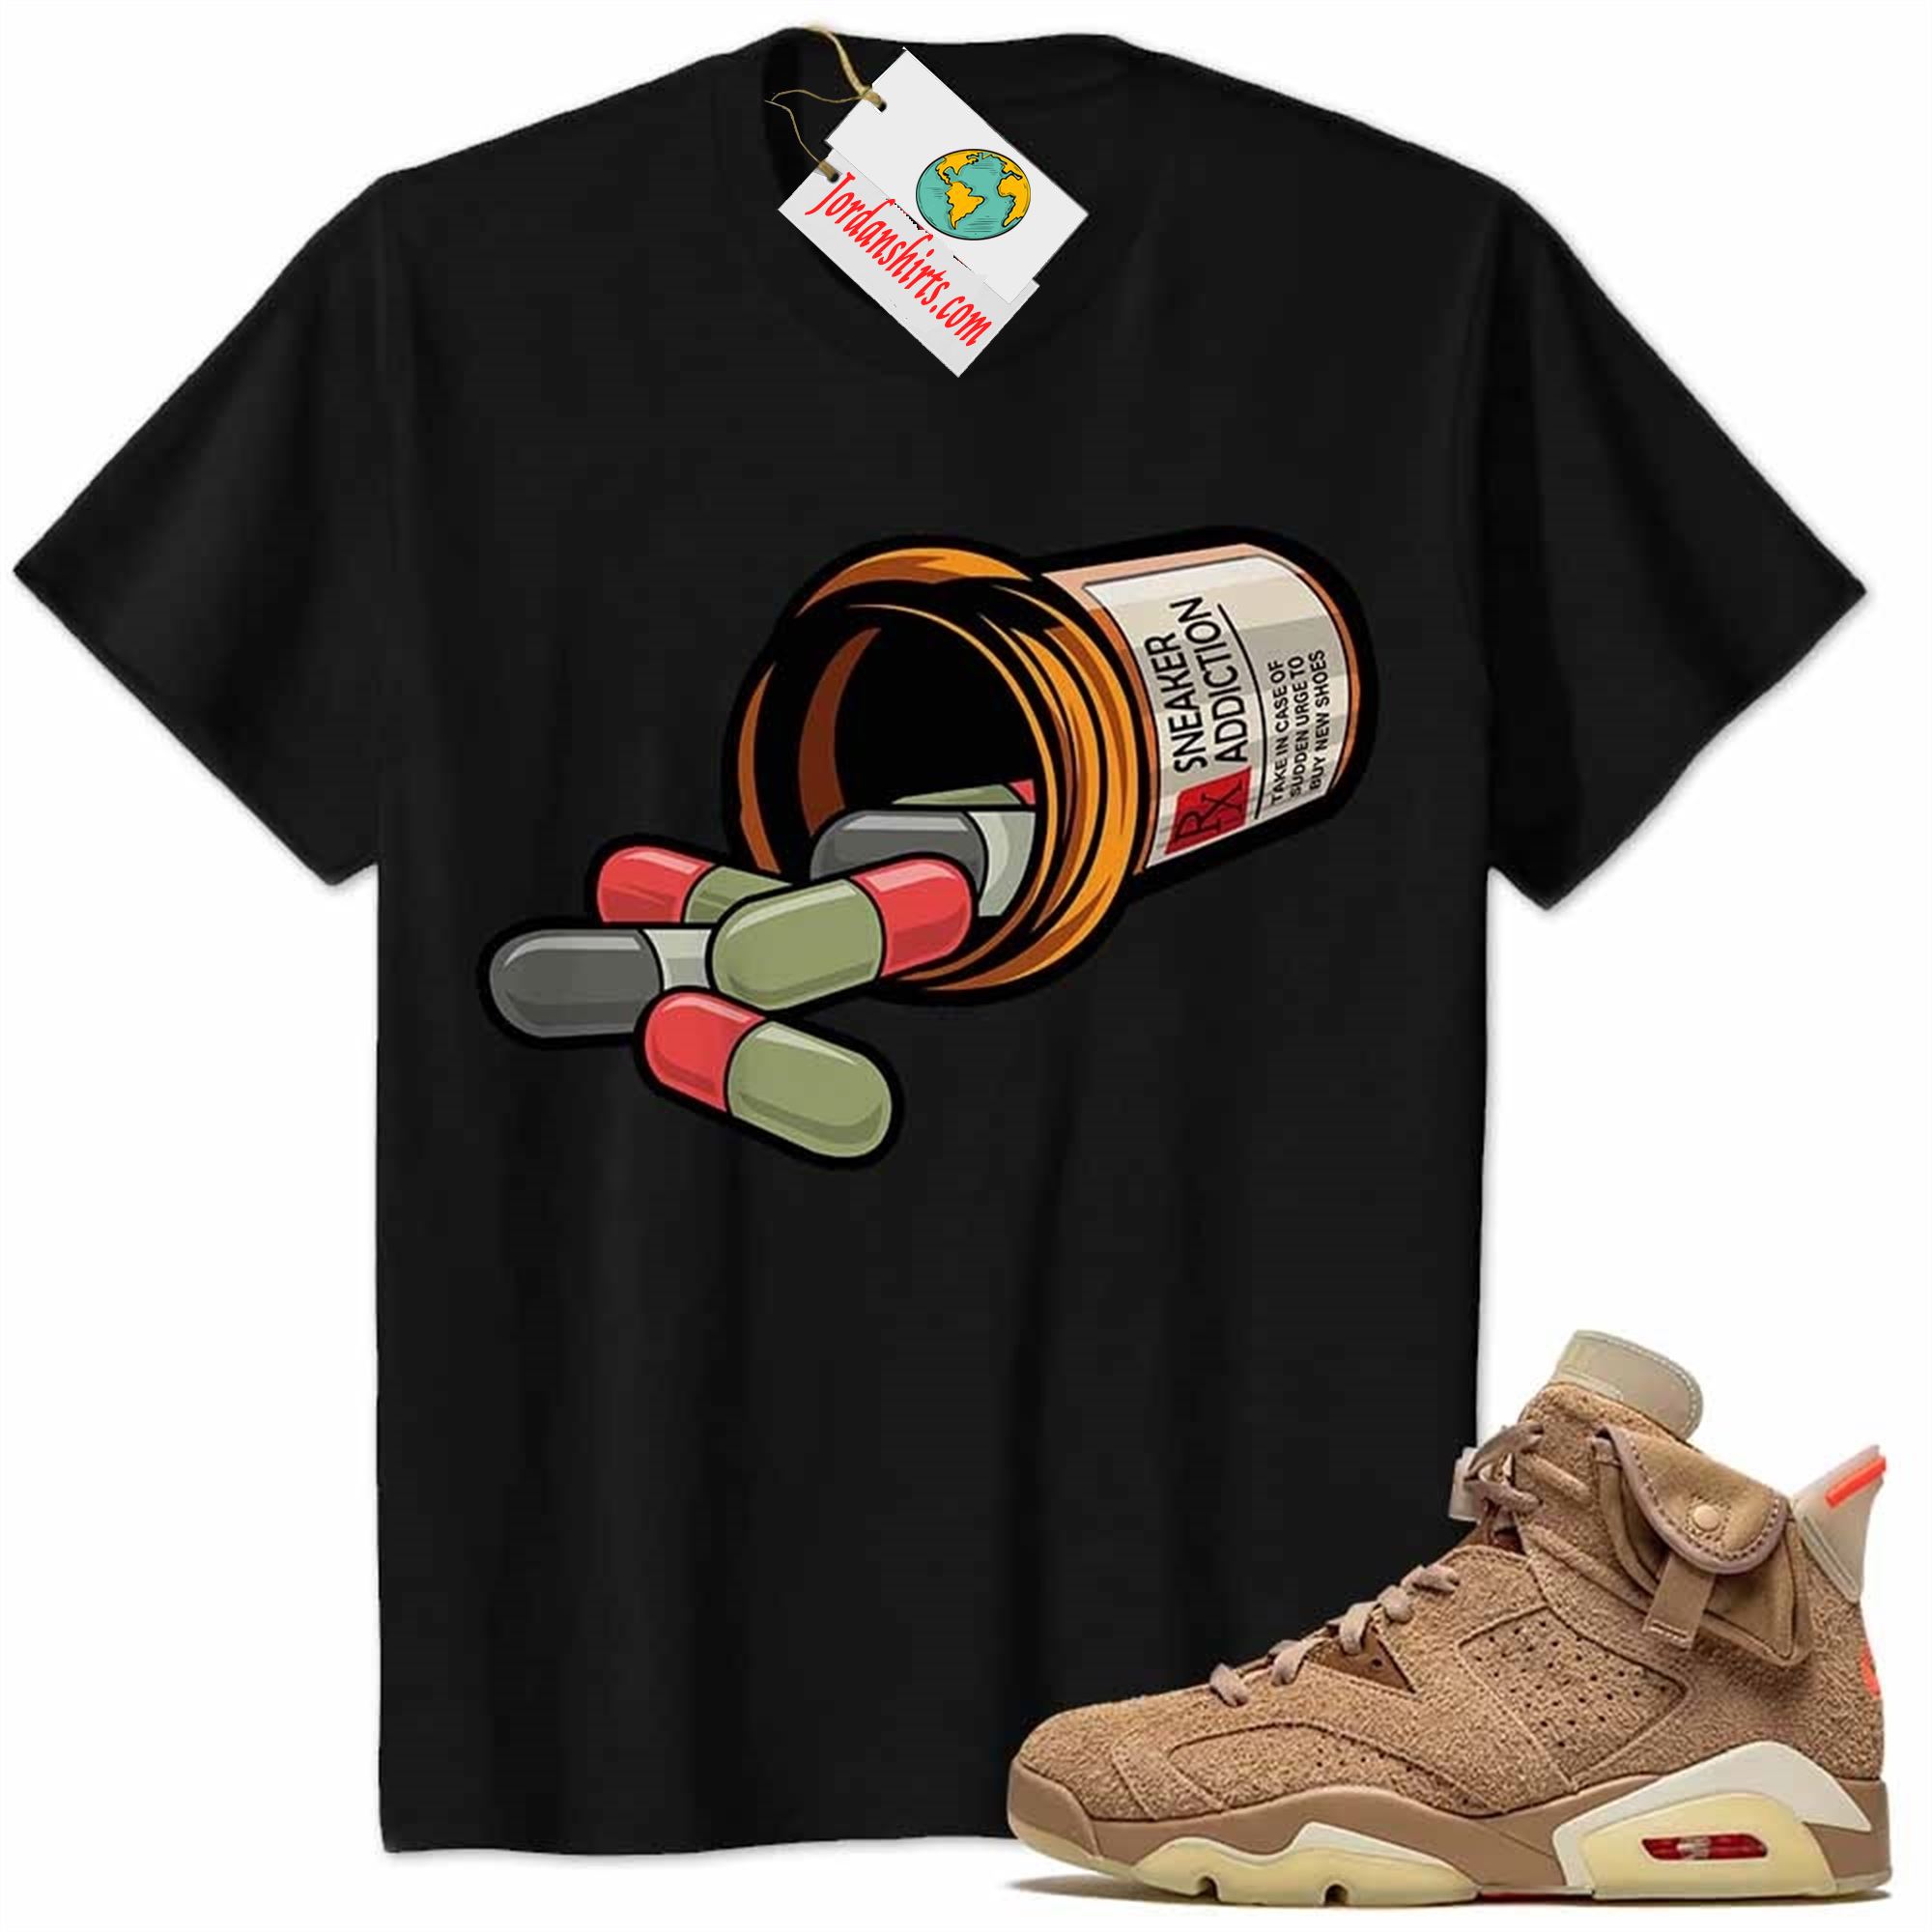 Jordan 6 Shirt, Rx Drugs Pill Bottle Sneaker Addiction Black Air Jordan 6 Travis Scott 6s Plus Size Up To 5xl